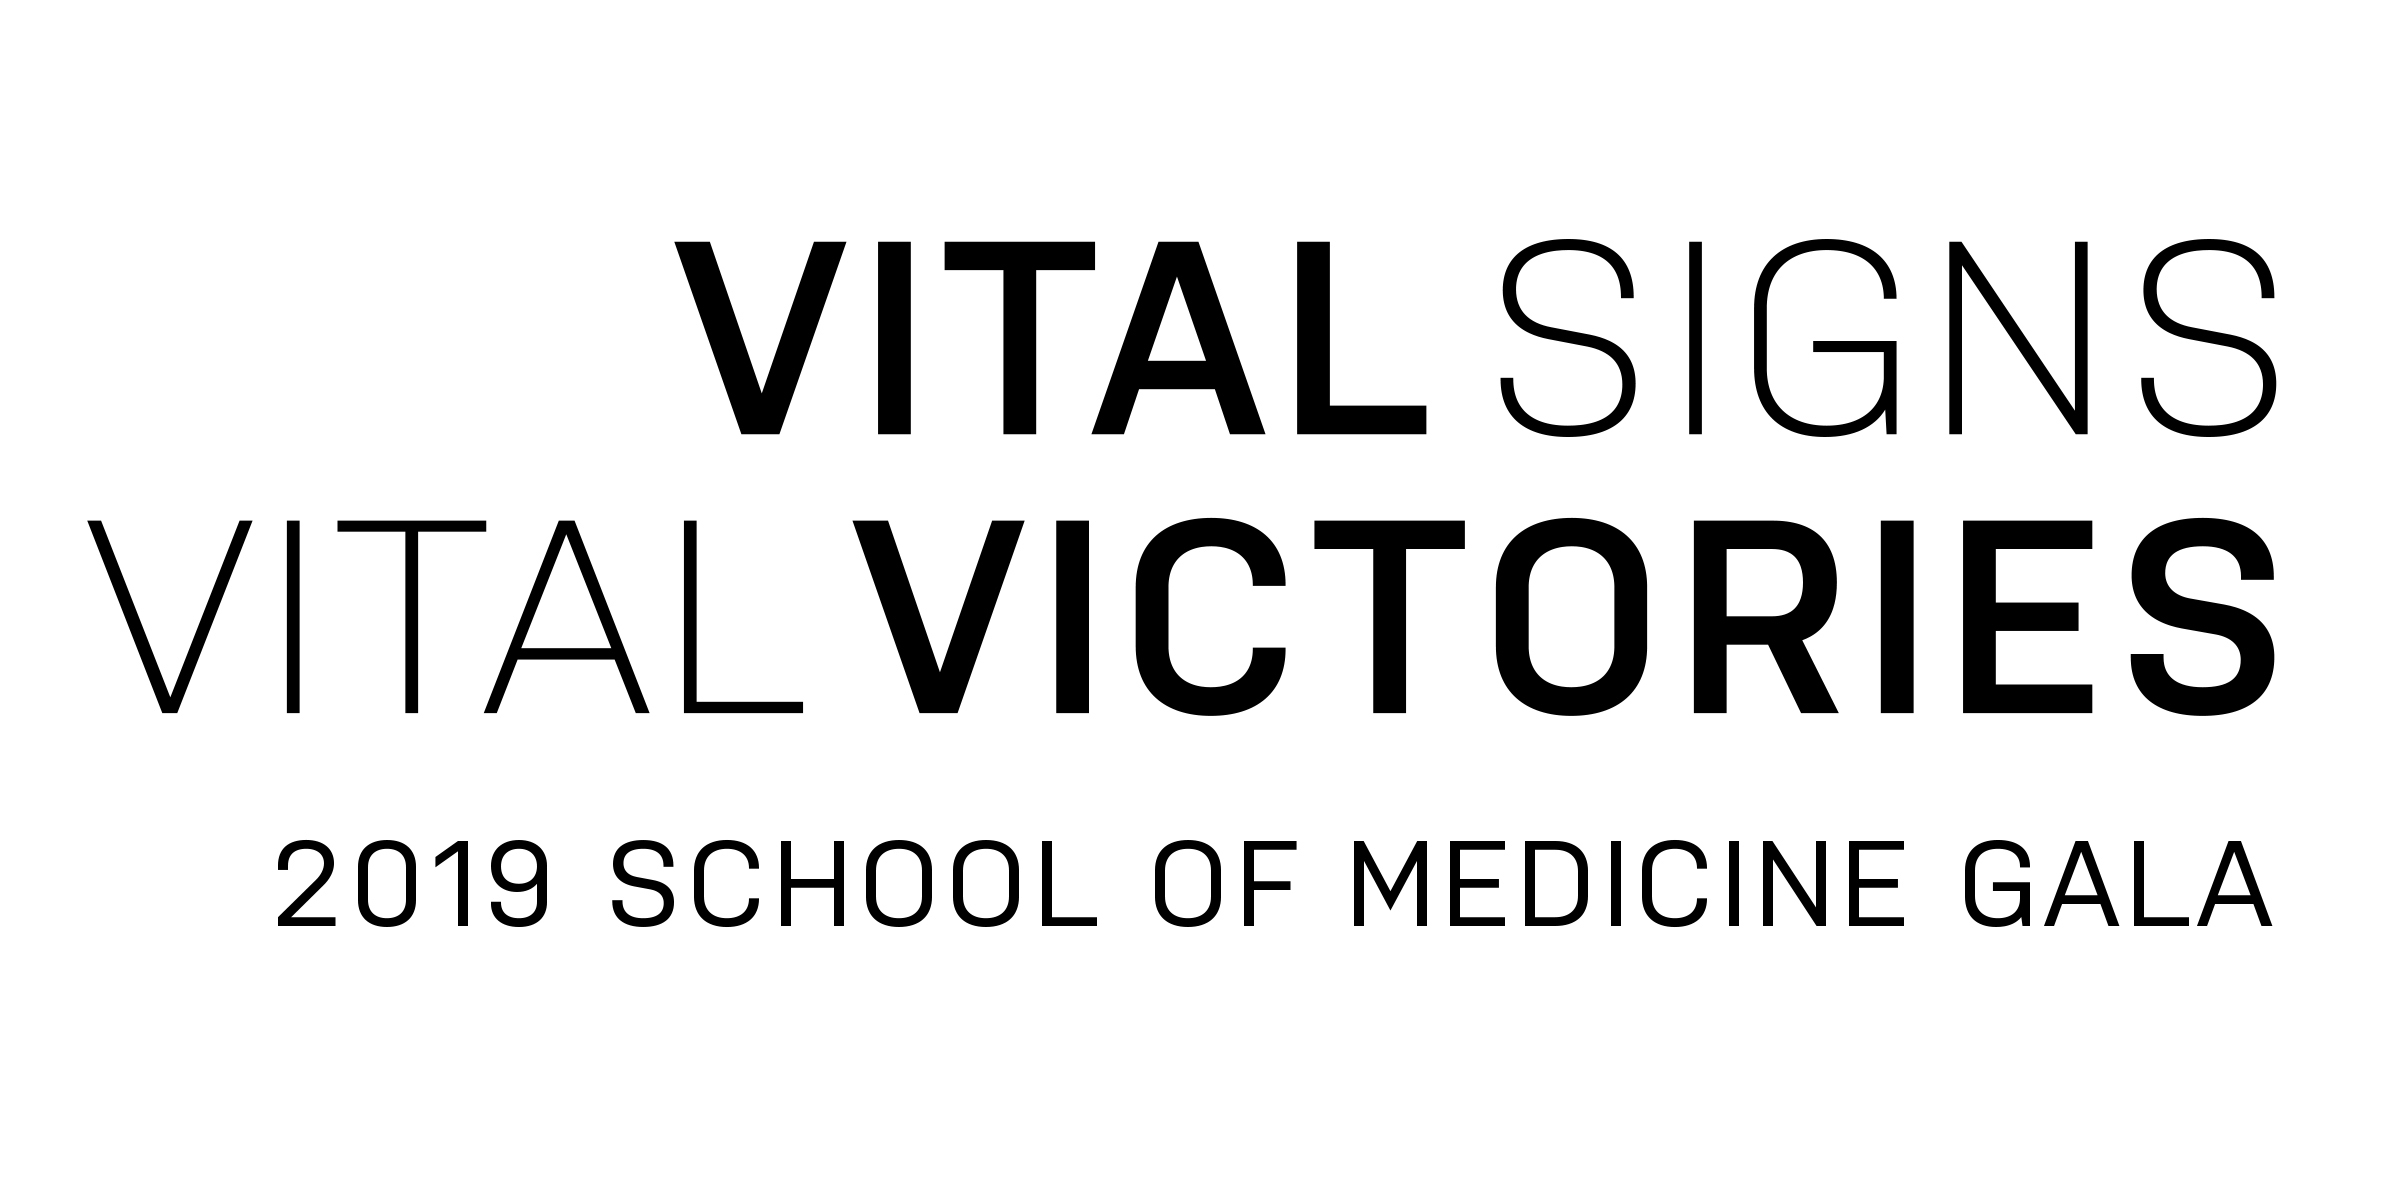 Gala Logo: Vital Signs, Vital Victories